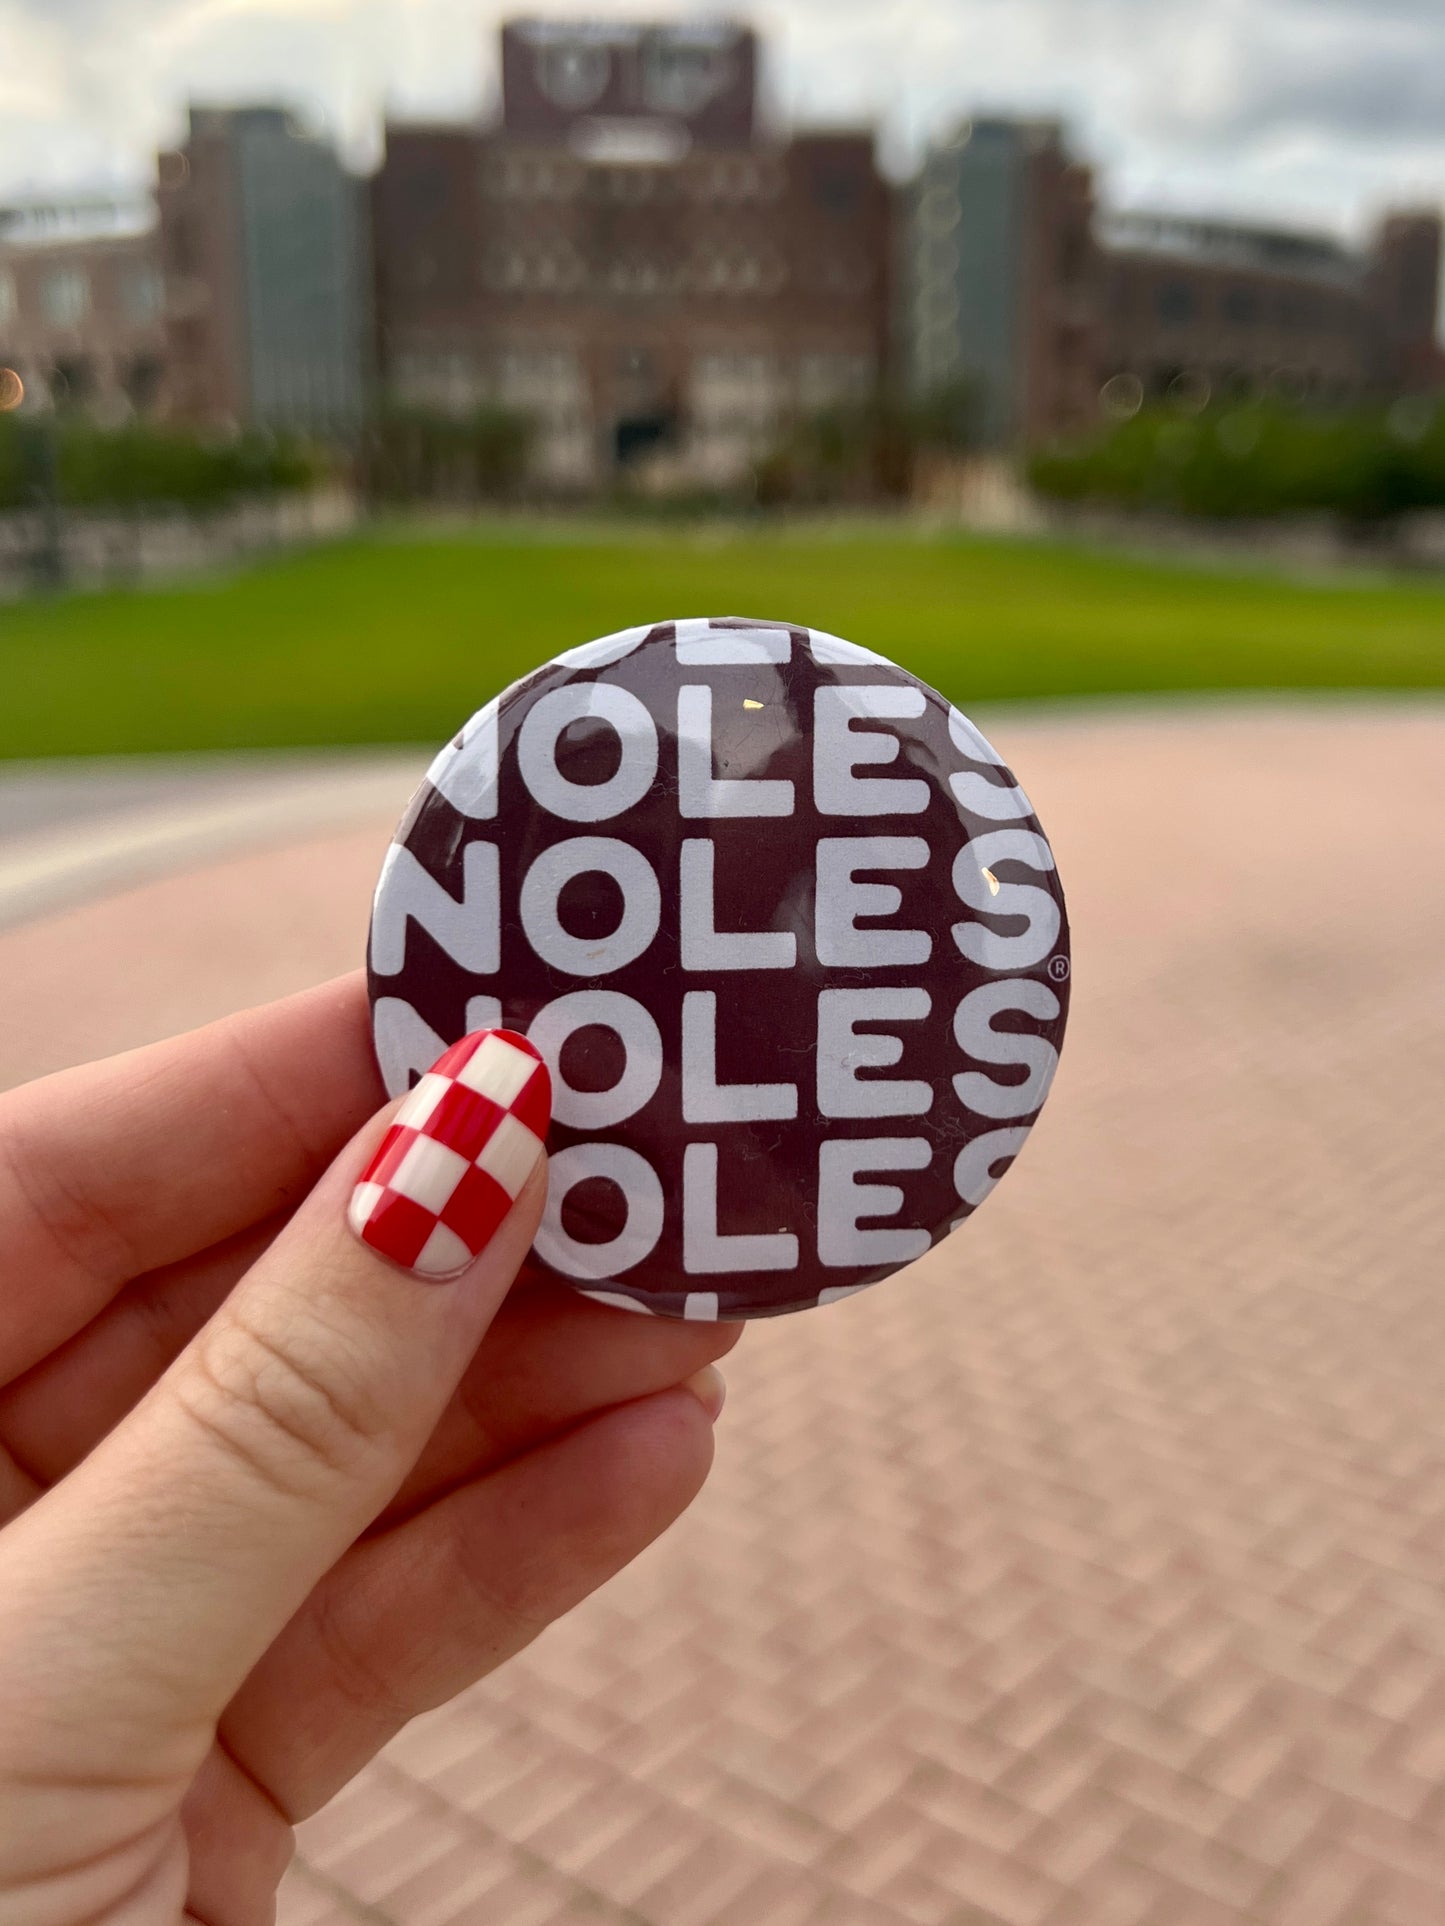 Florida State University “NOLES” button